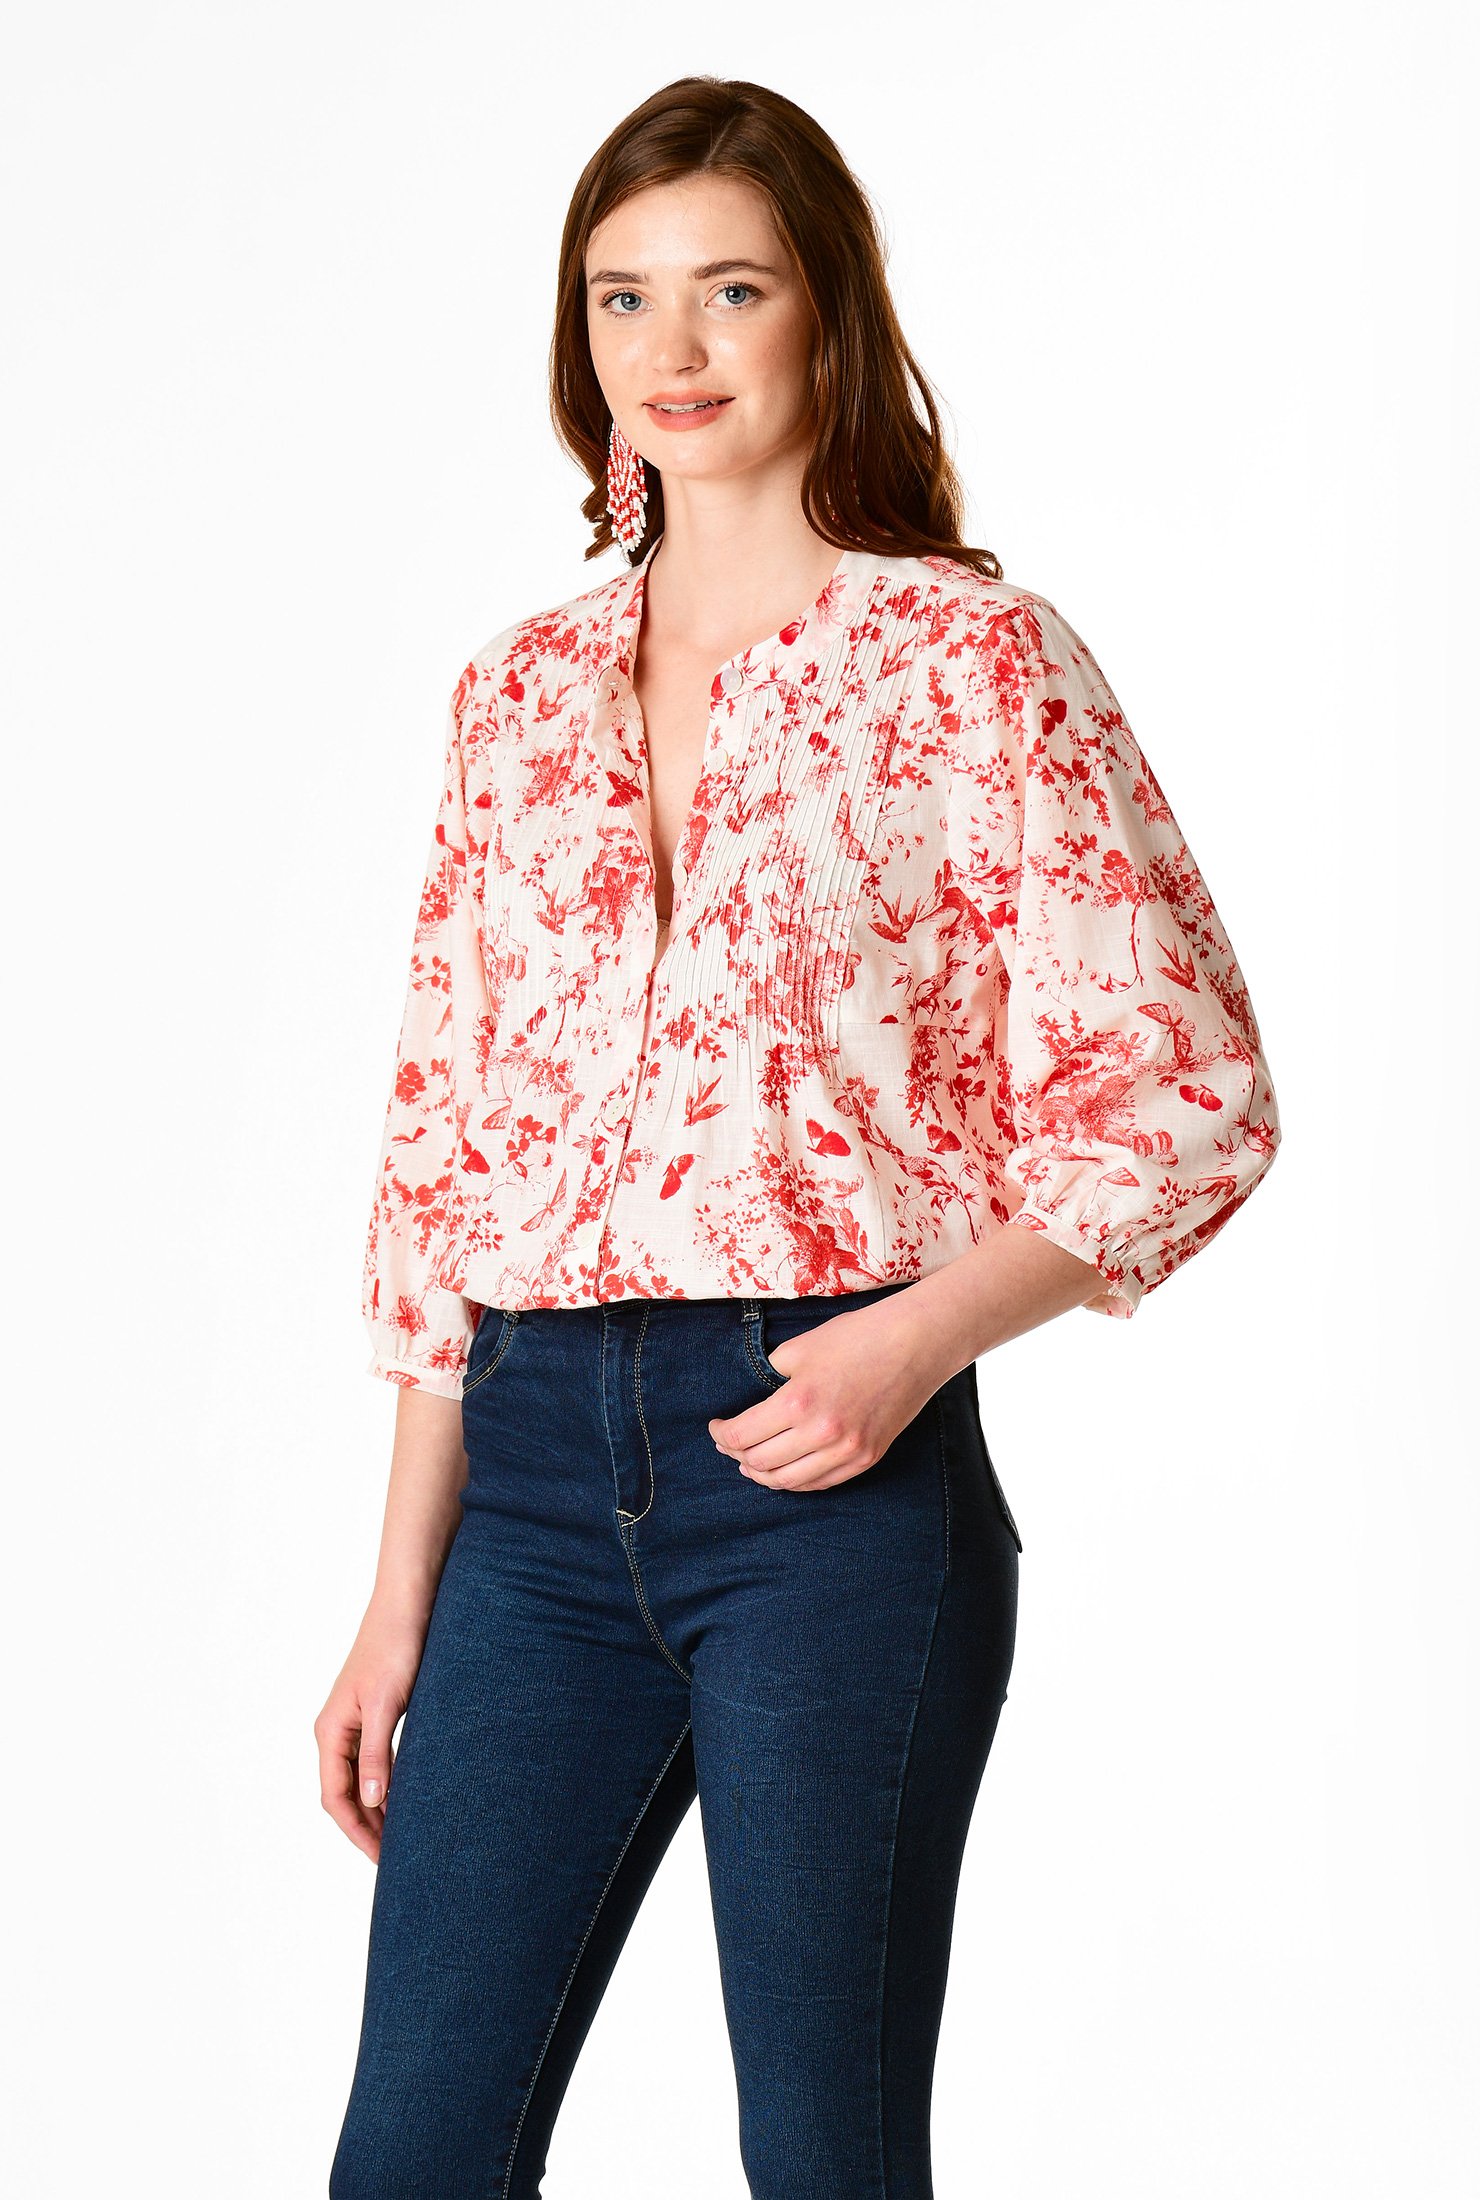 Shop Pintuck pleat floral print cotton top | eShakti